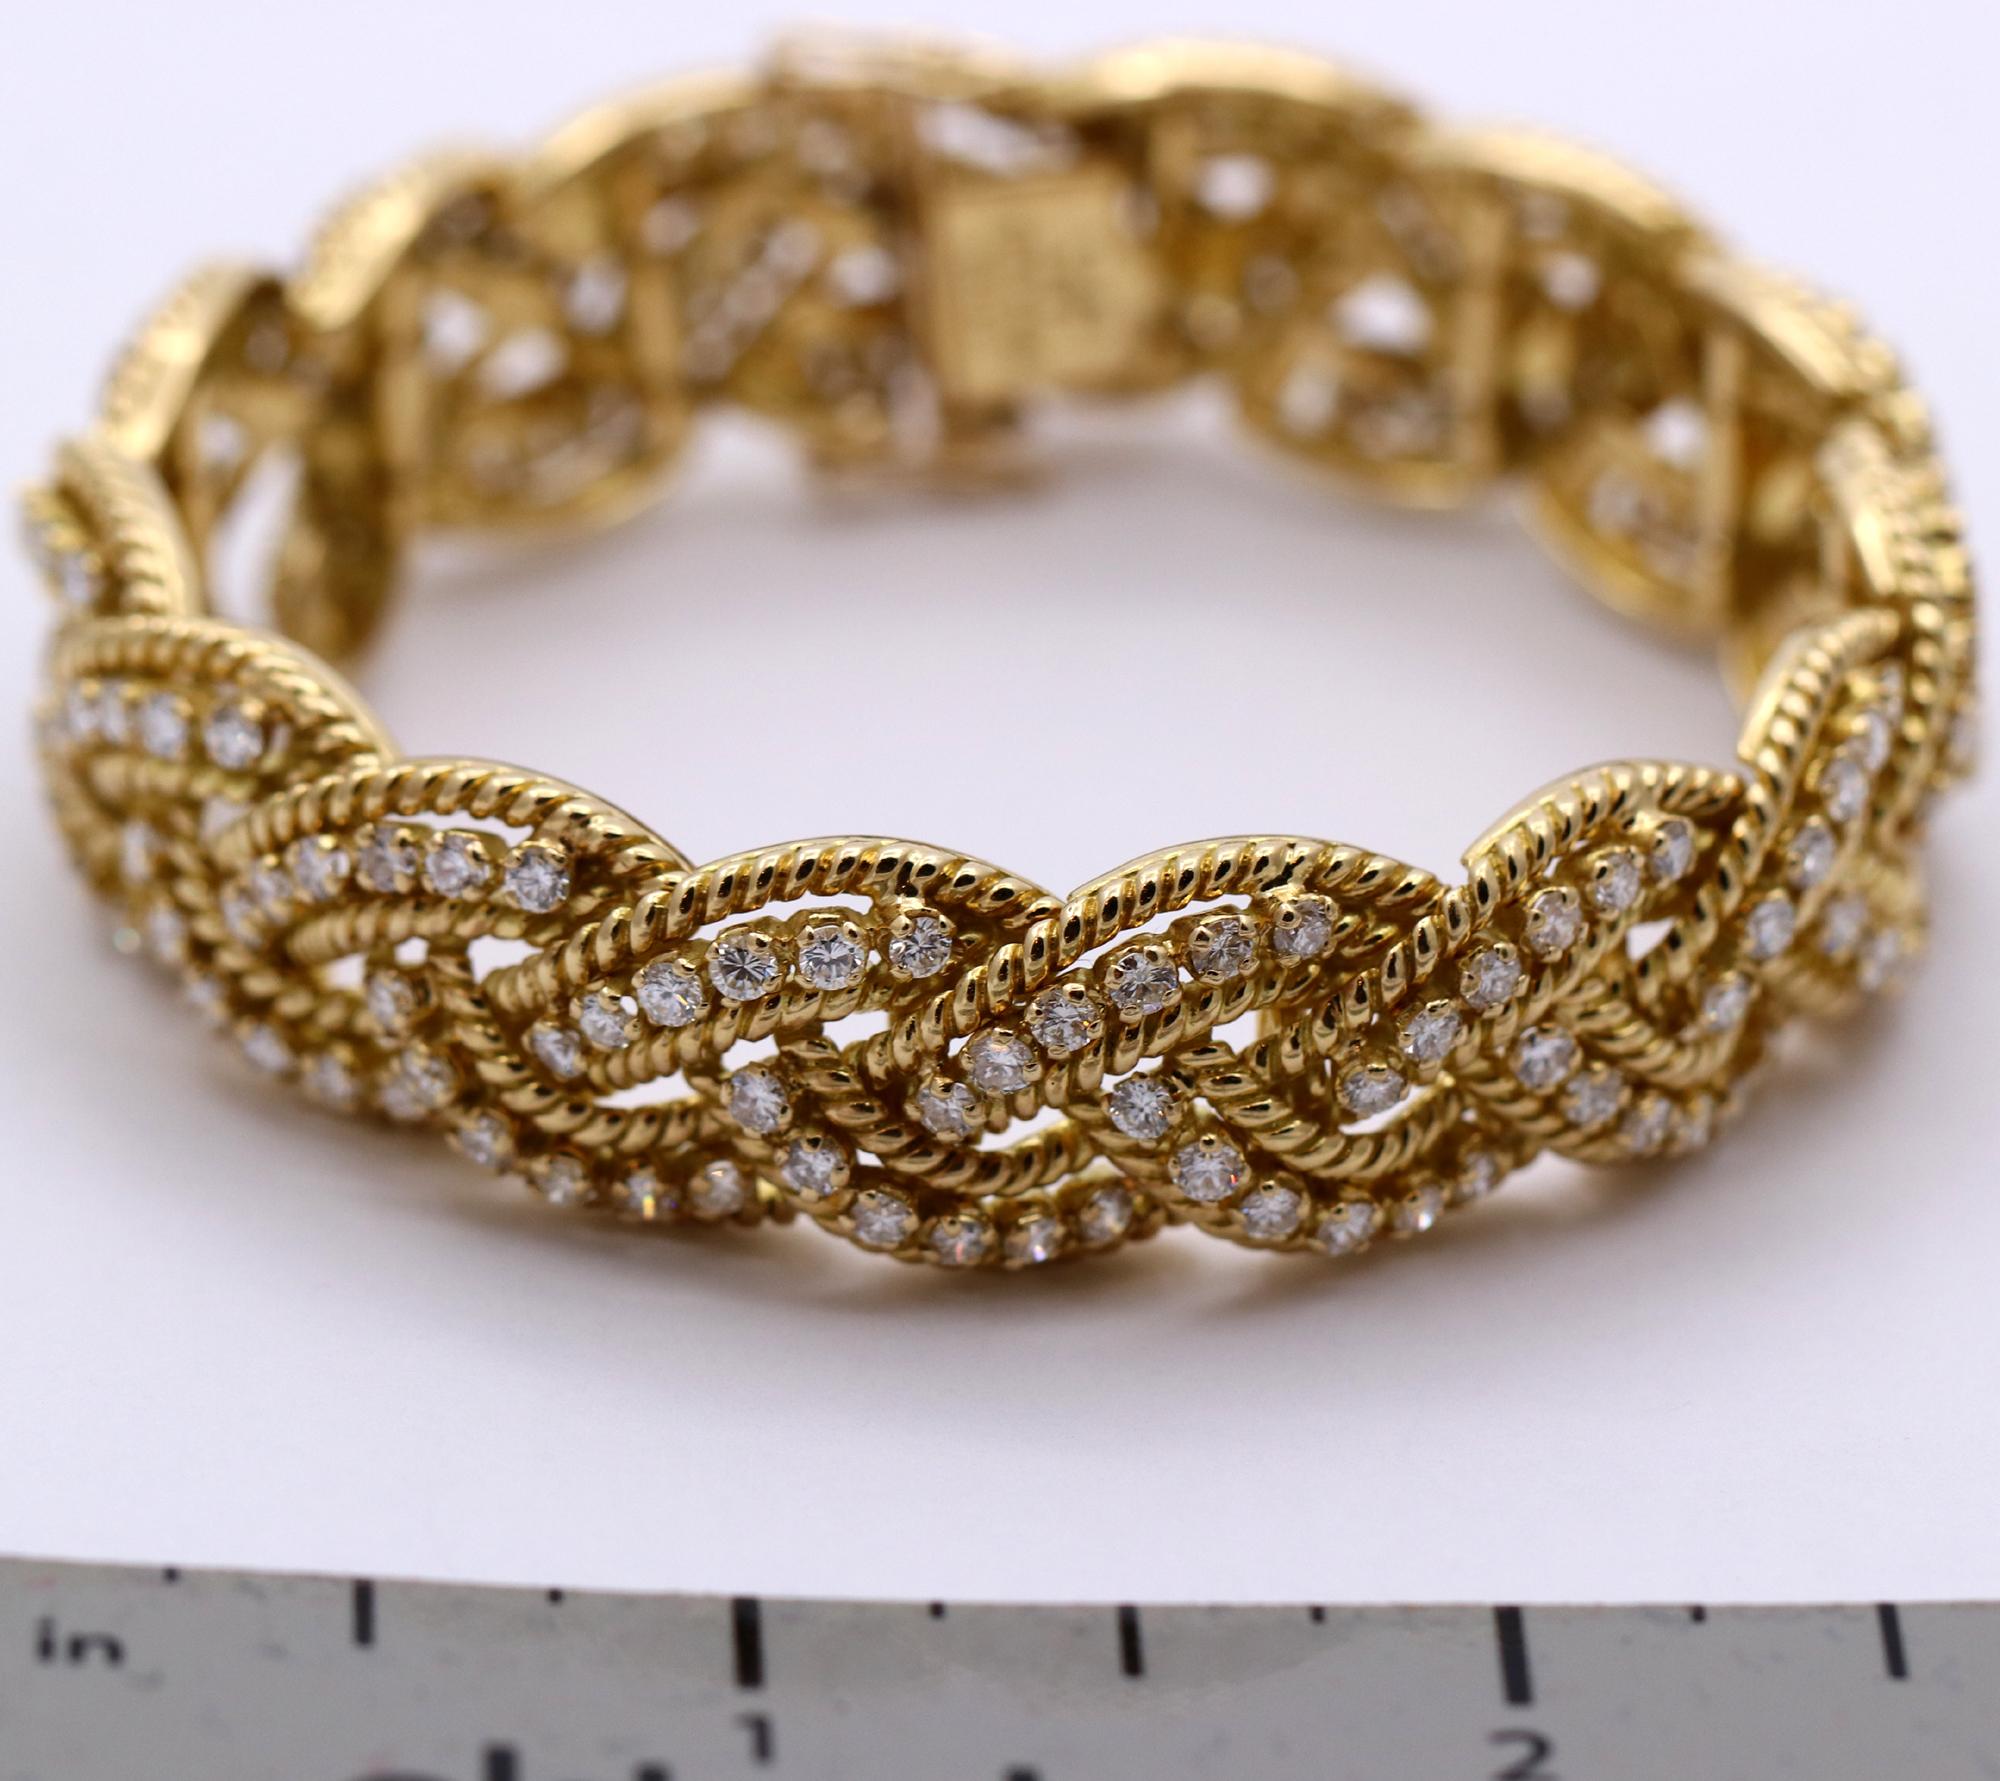 Spritzer and Fuhrmann Braided Gold Design Bracelet with Diamonds 1